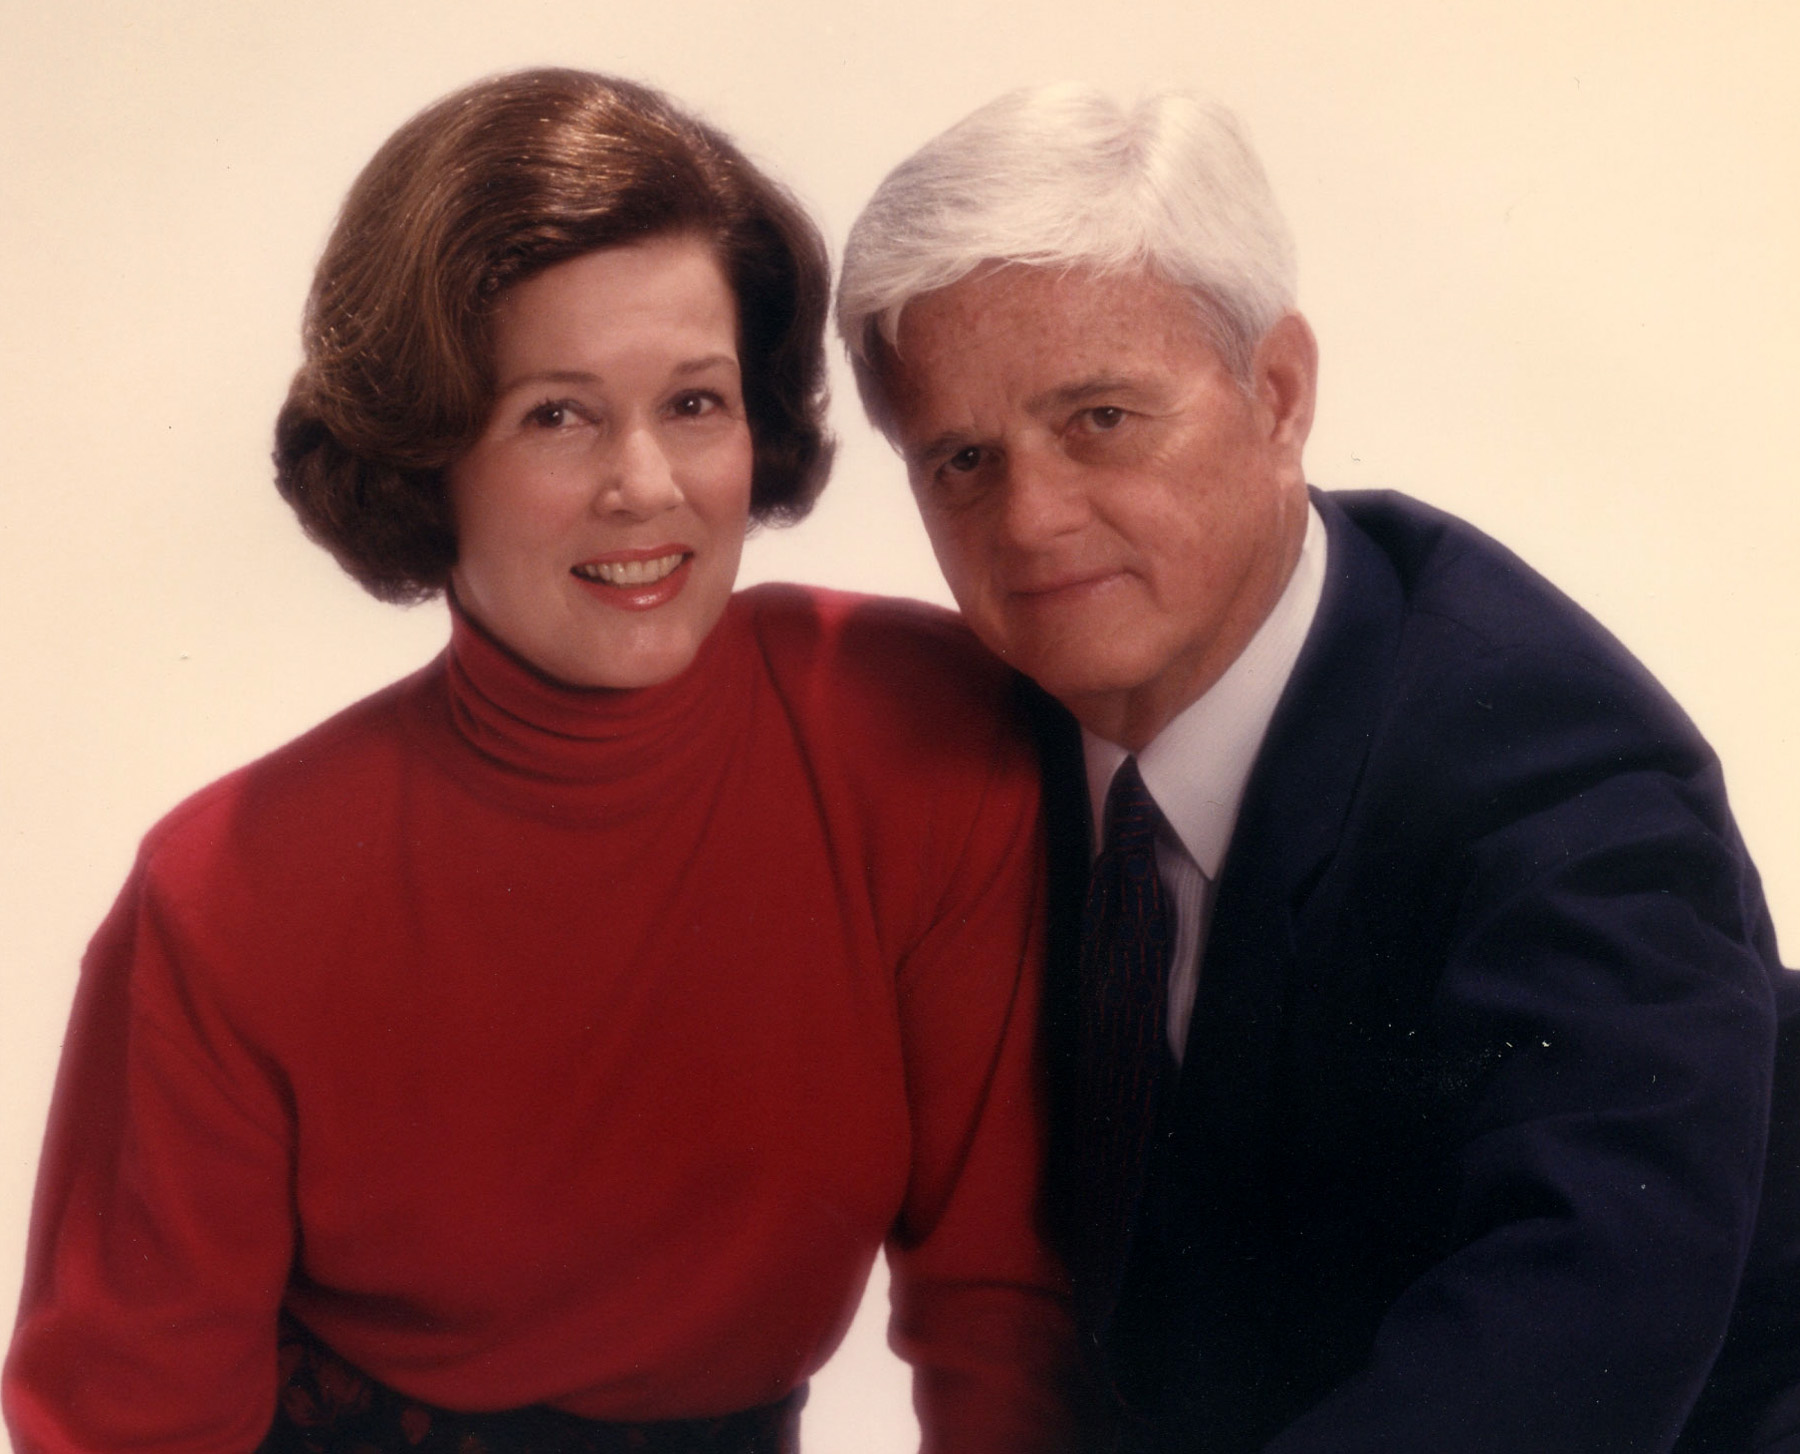 Dr. Bob and Jean Smith